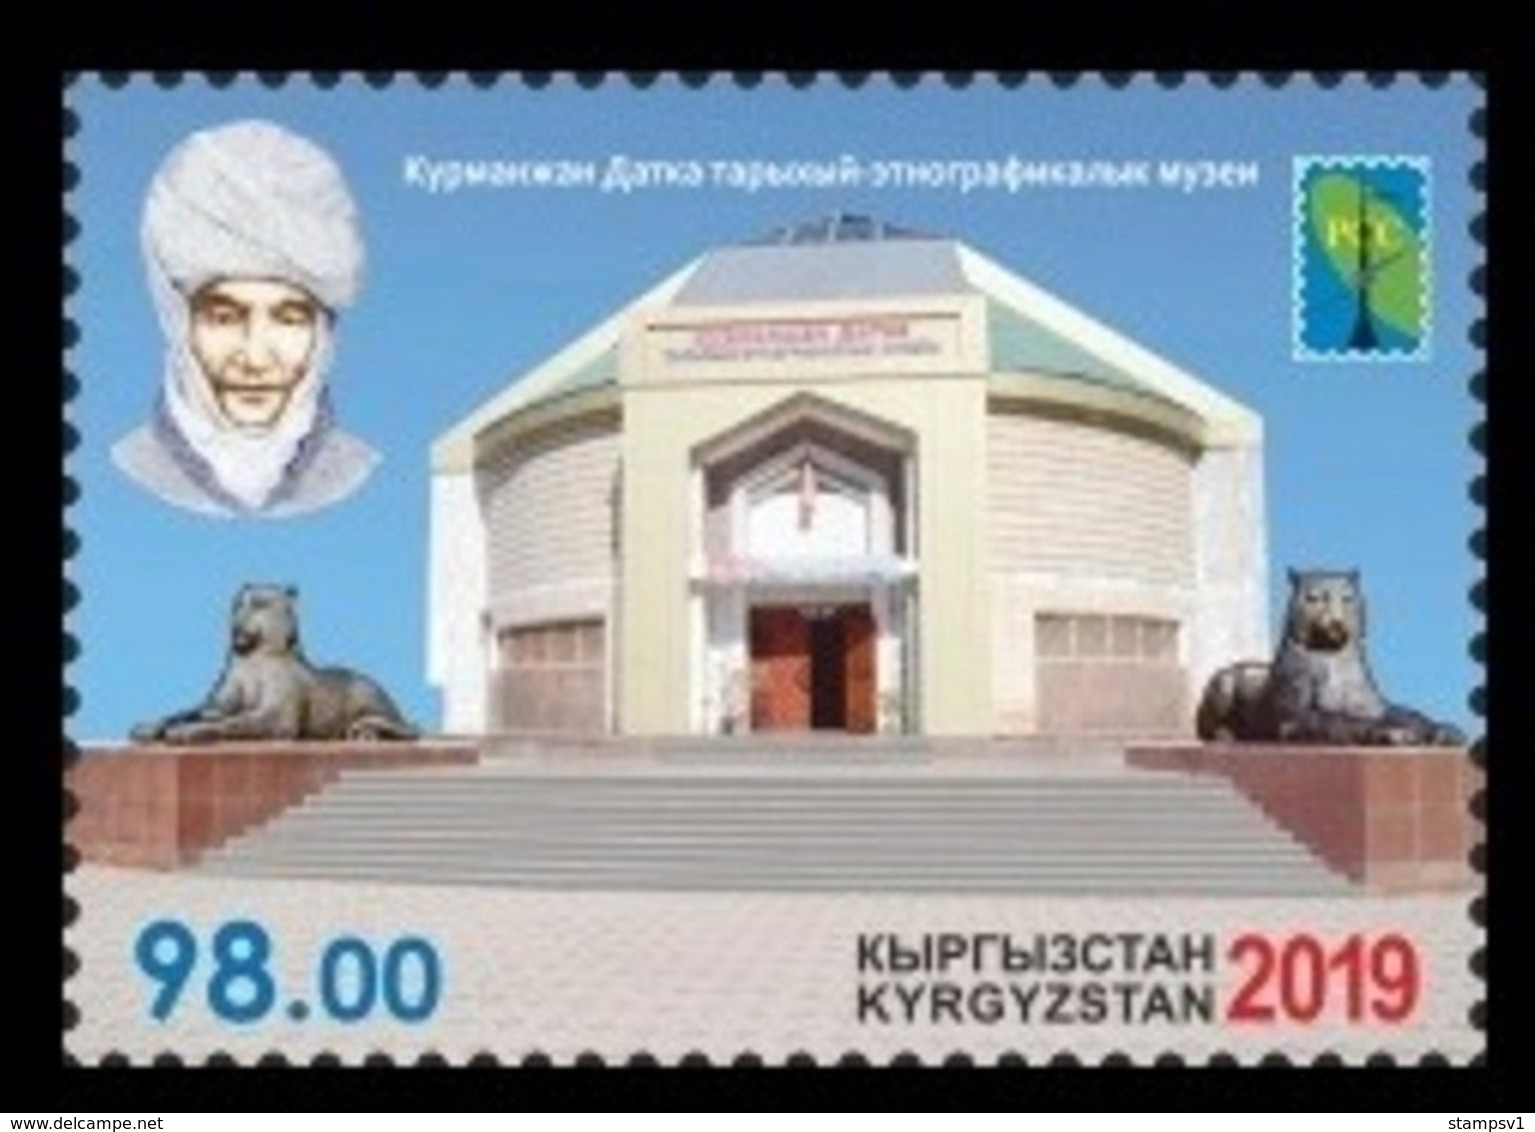 Kyrgyzstan. 2019  Museum Of Kurmanzhan Datka. - Kyrgyzstan